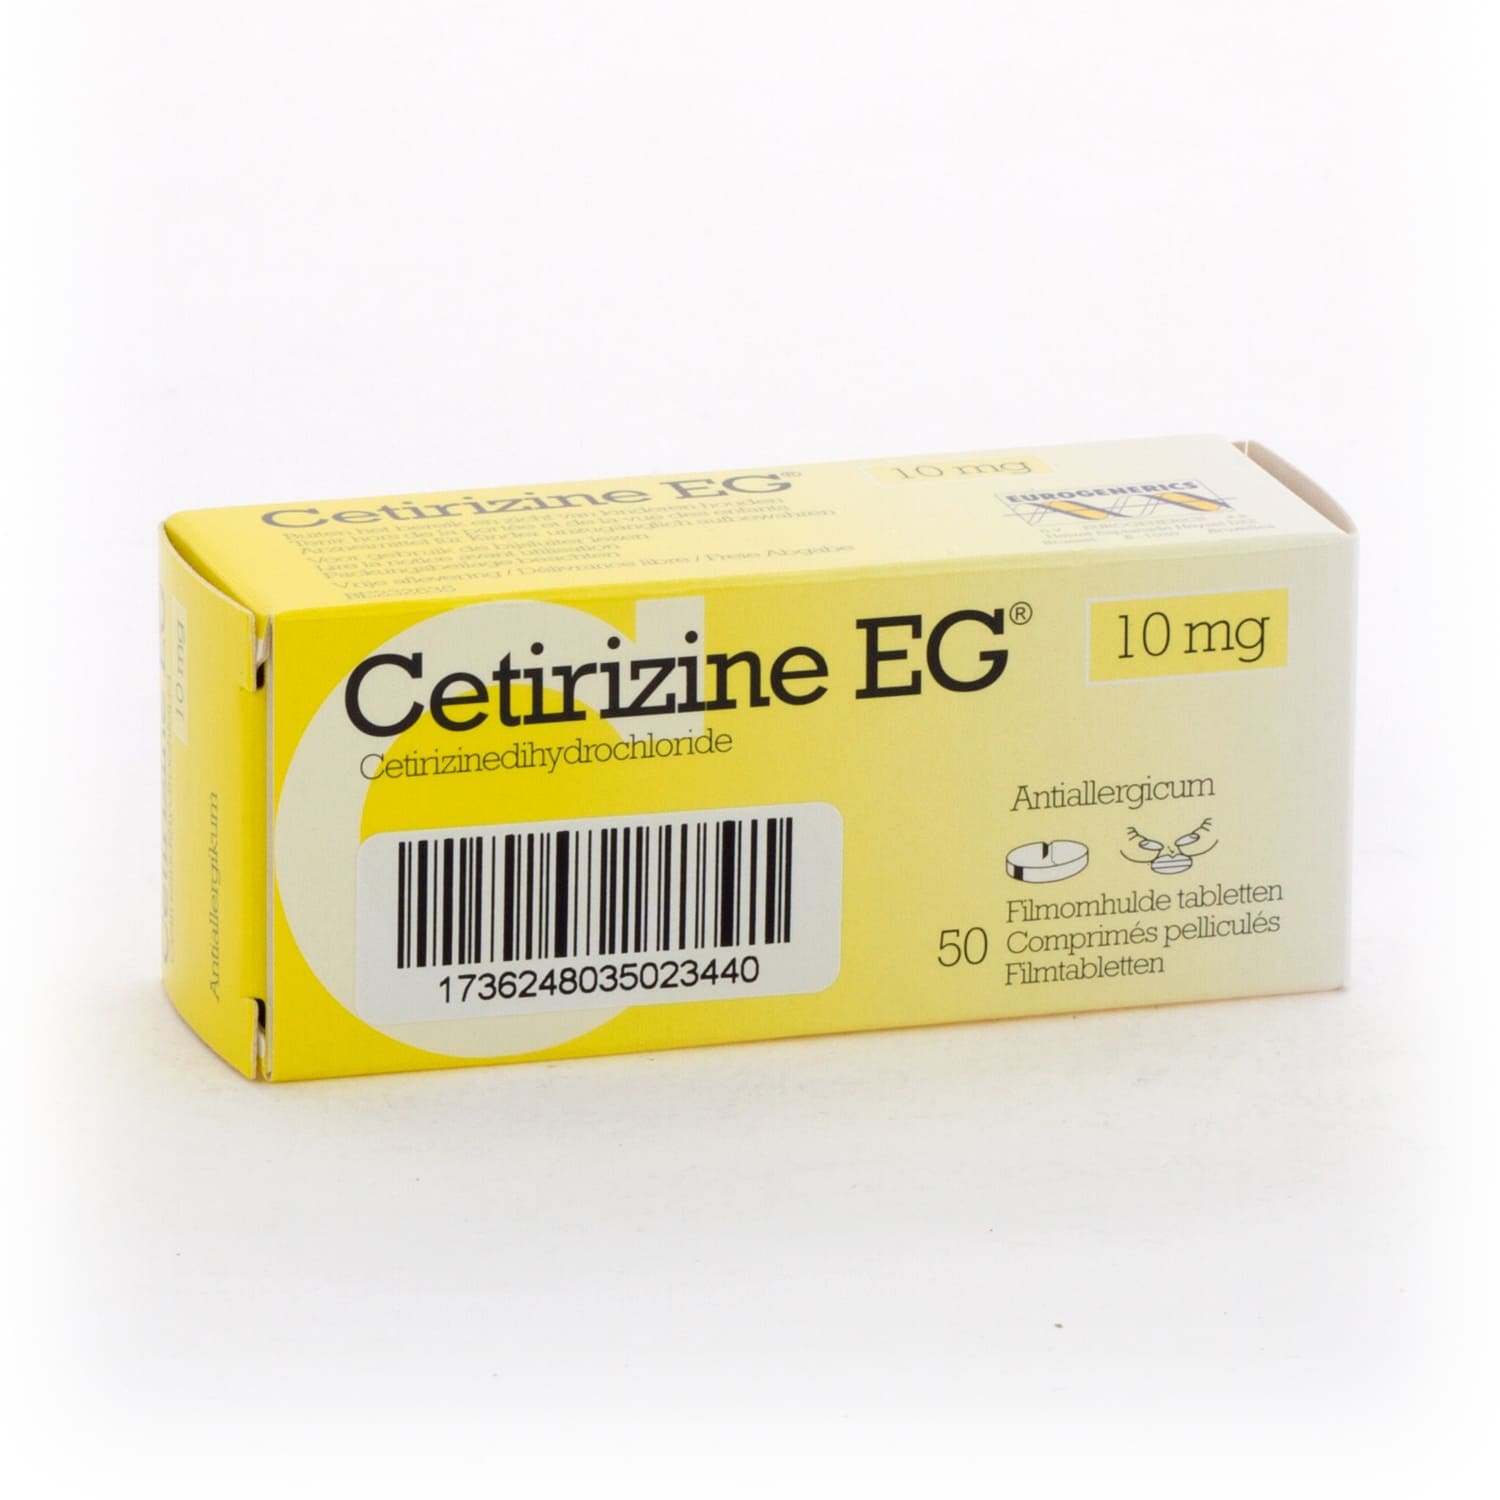 Cetirizine EG 10 mg